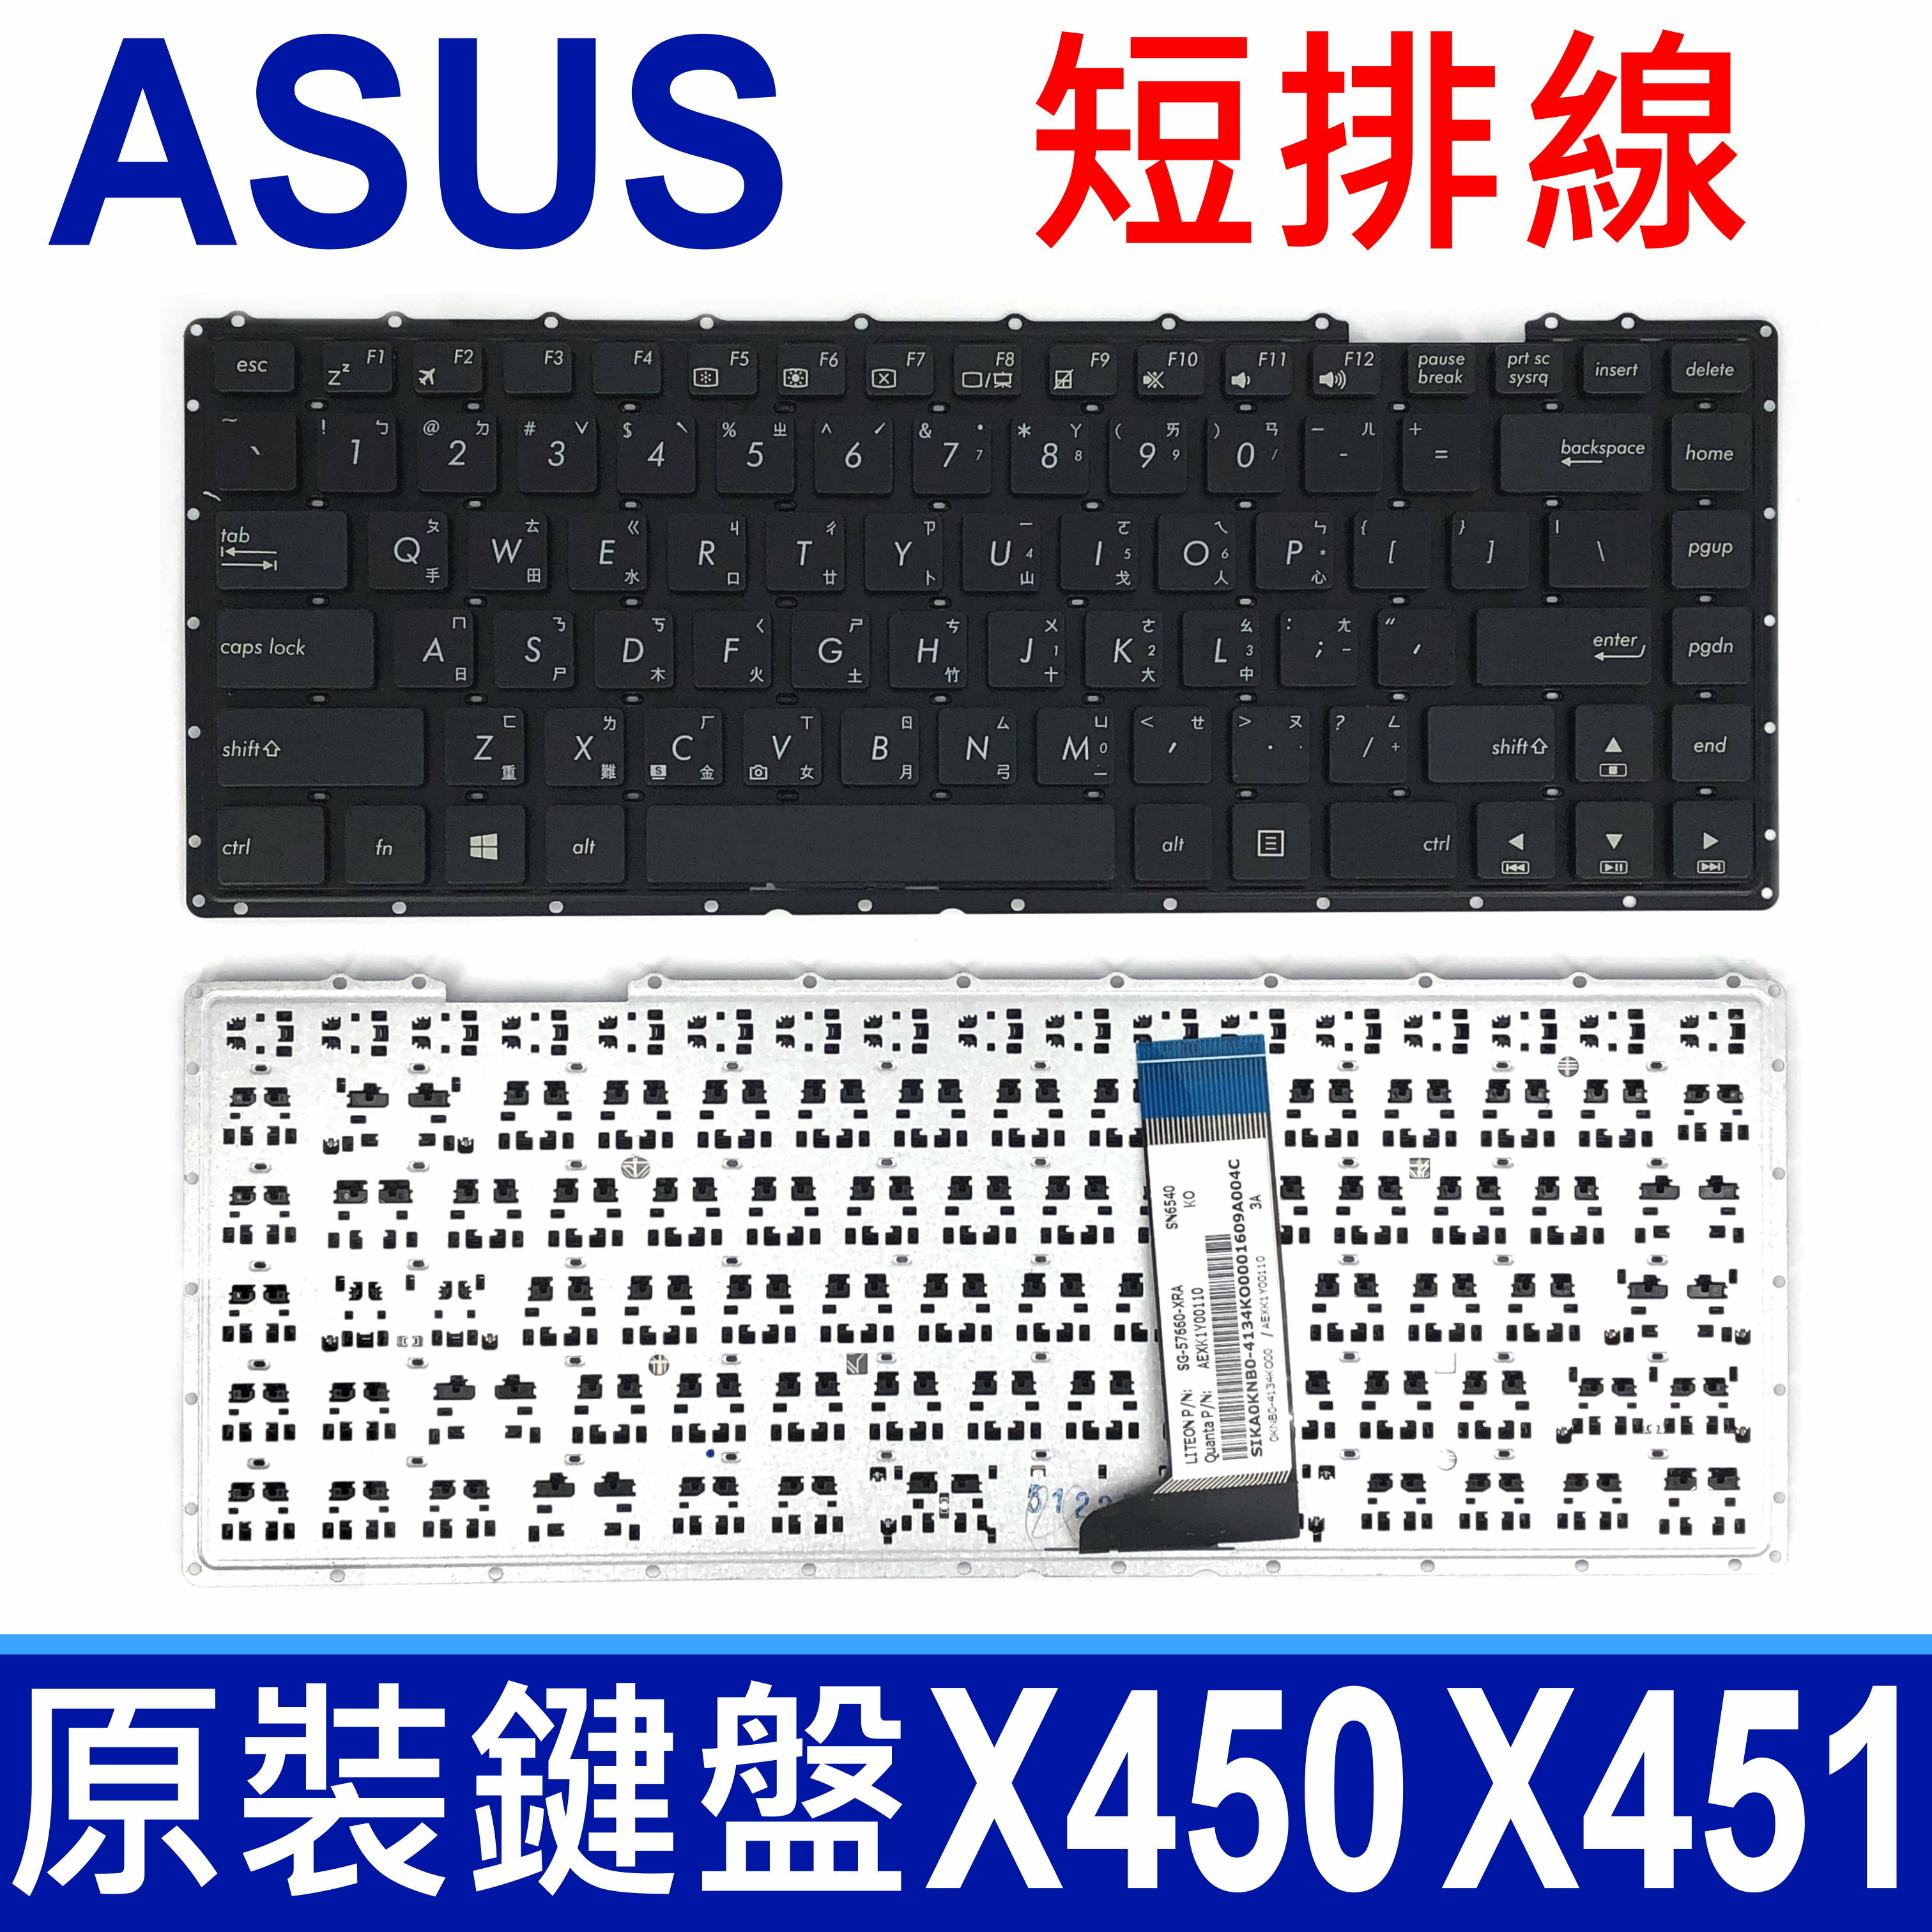 ASUS 華碩 X450 X451 短排 筆電 中文鍵盤 A455 A455AF A455LD A455L K455 K455L F454 F455 F455L F455LD F455LJ R454L R455 R455L V455L W419 W419C W419L X403 X403M X451C X451CA X451E X451M X451MA X451V